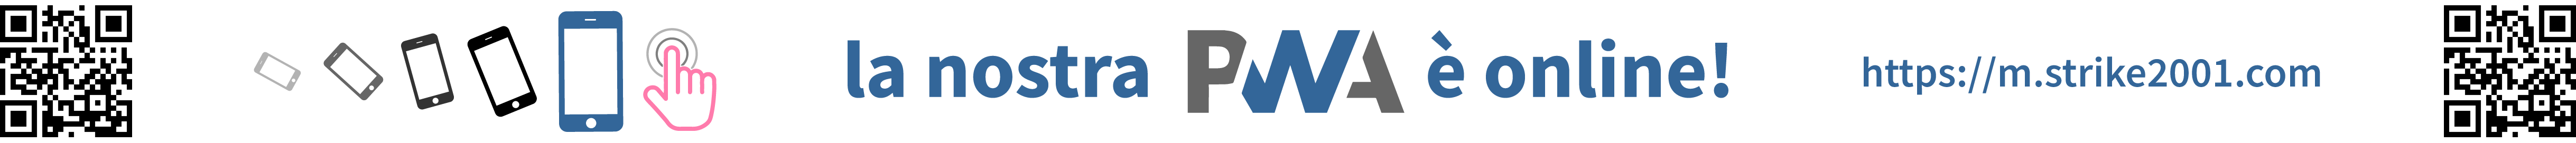 La nostra PWA è online!